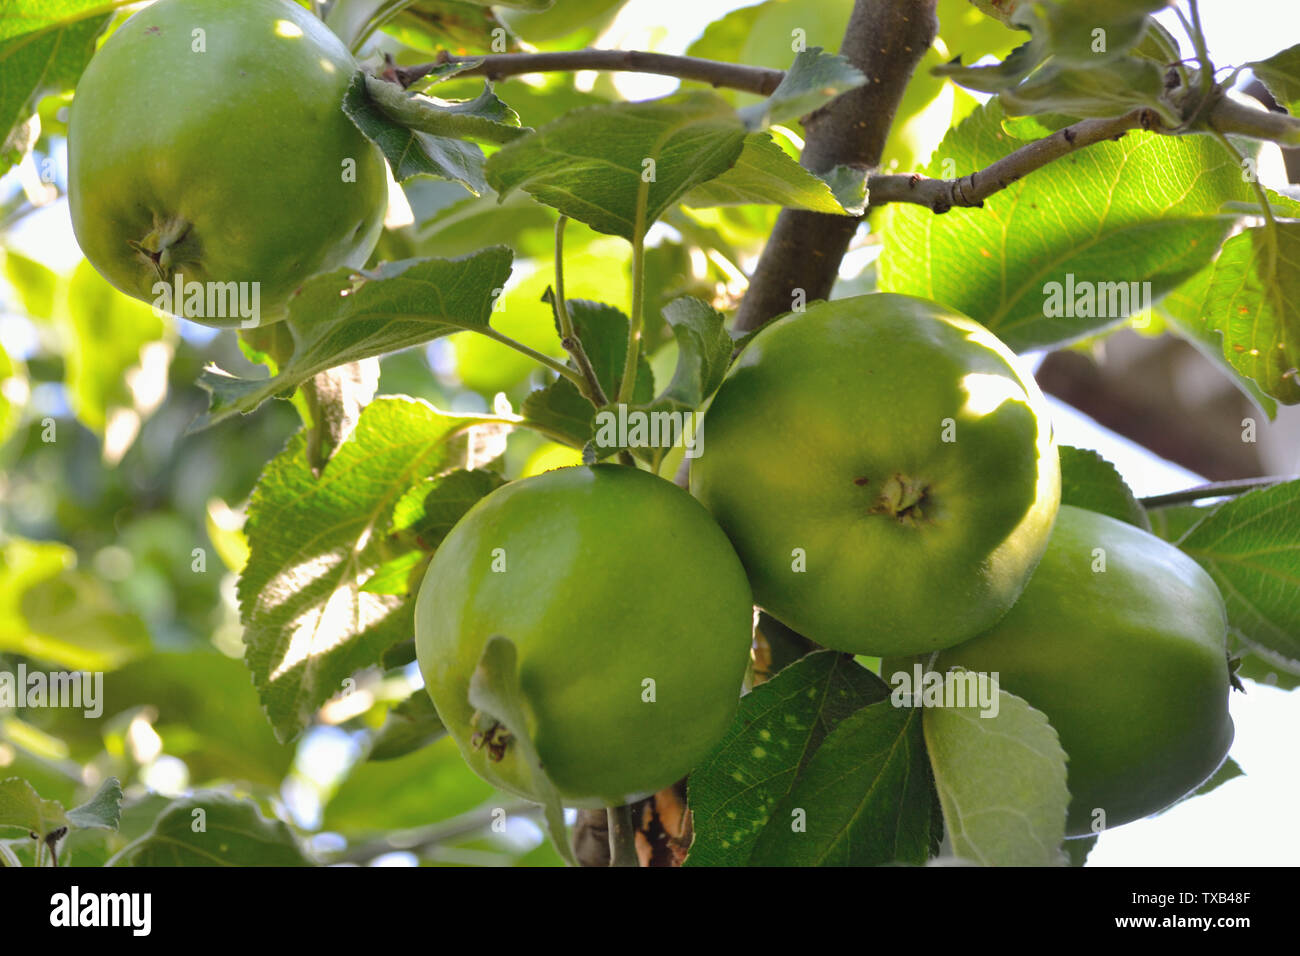 Malus pumila, granny smith apples on the branche Stock Photo